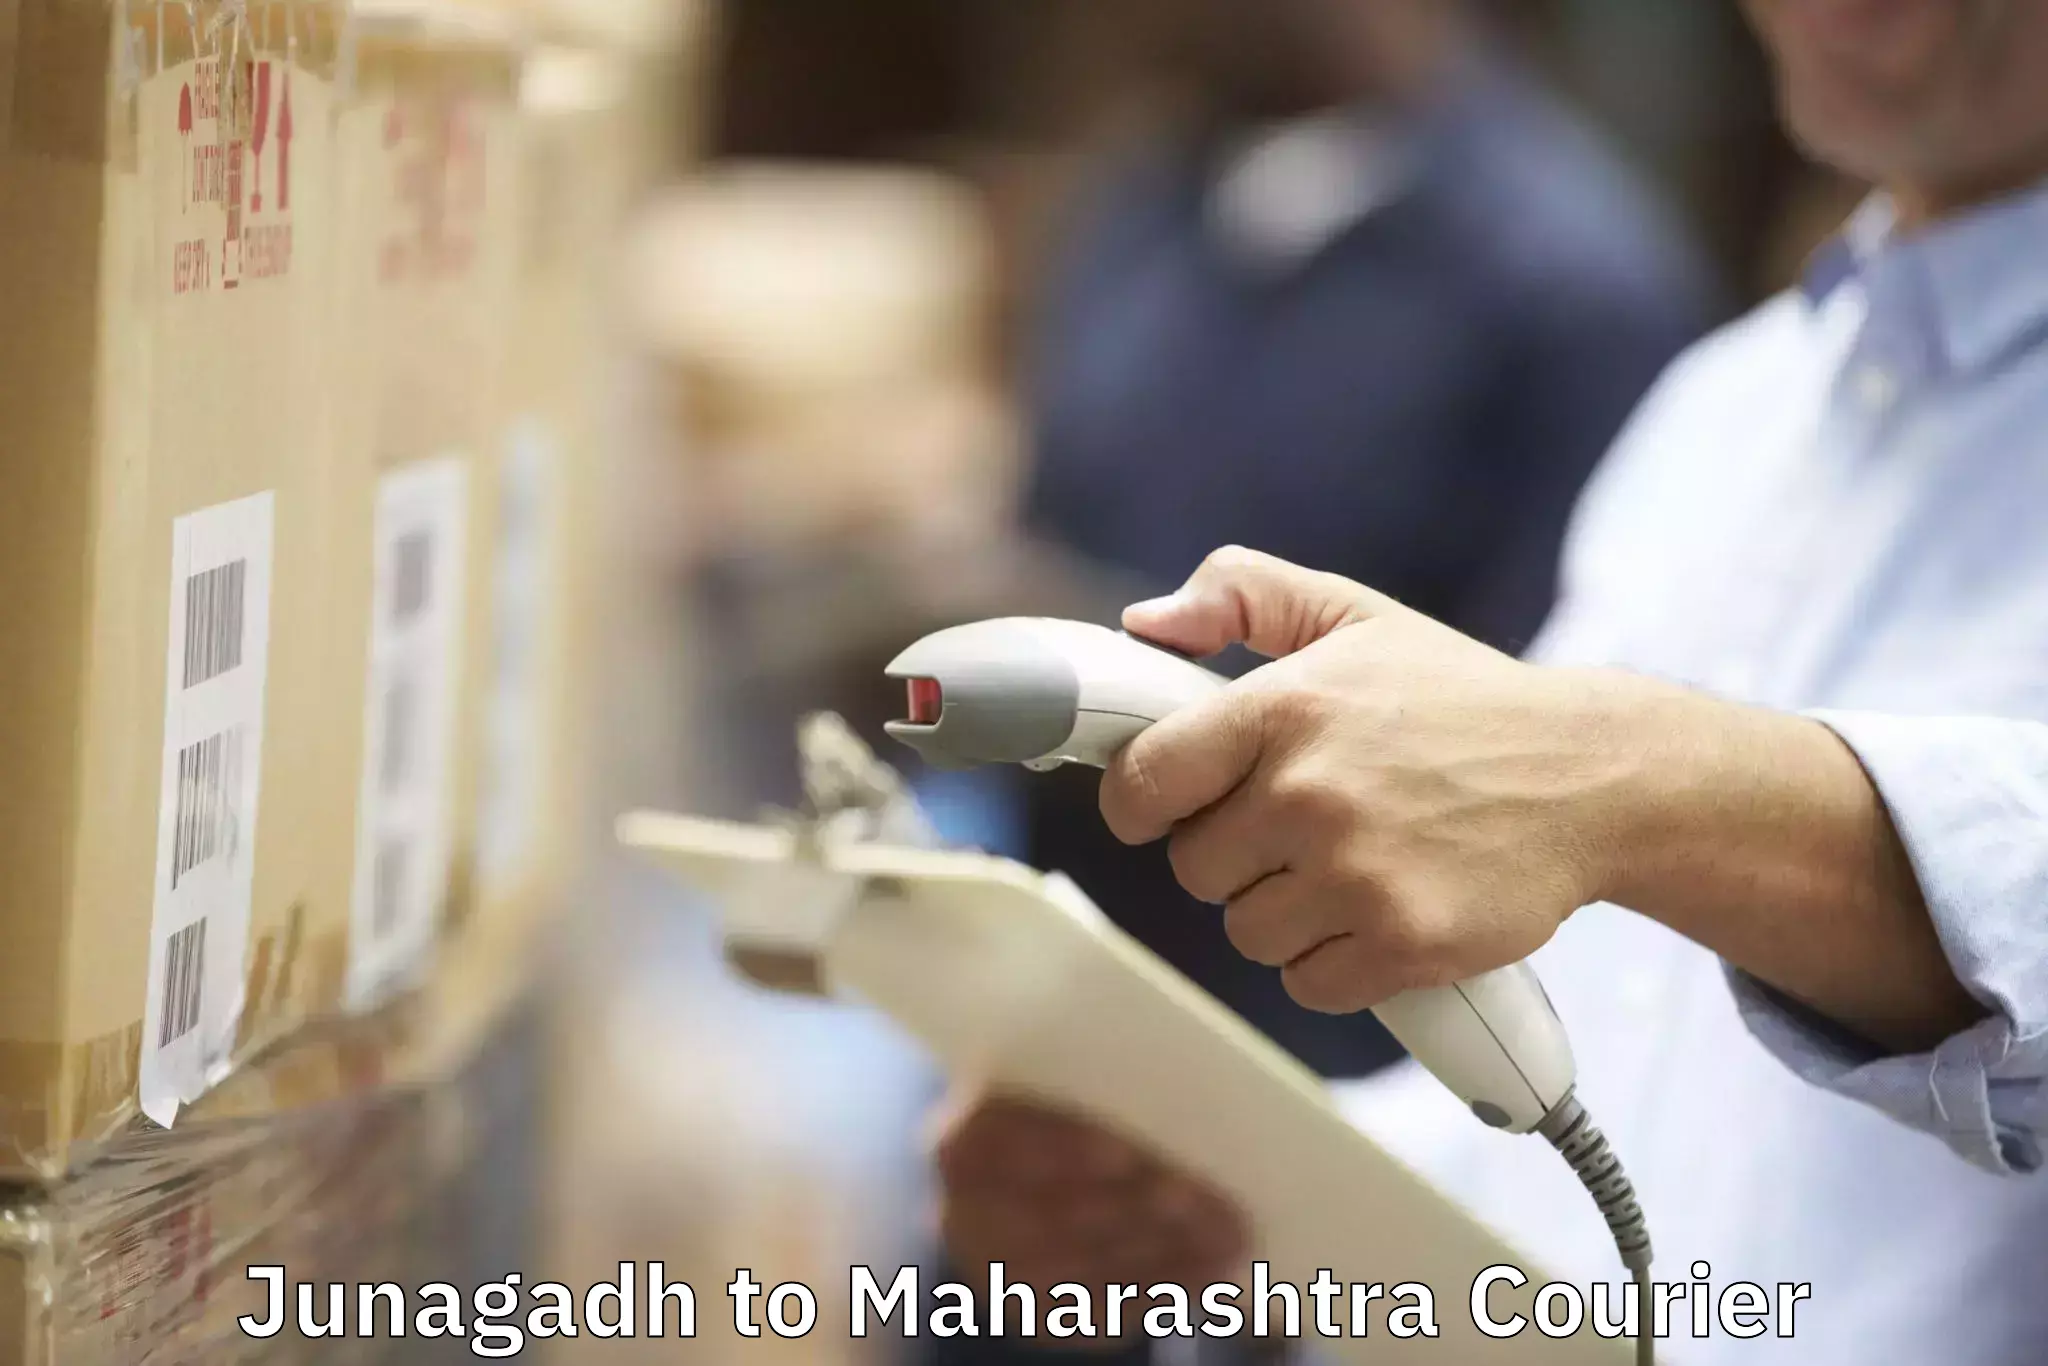 Furniture delivery service Junagadh to Maharashtra